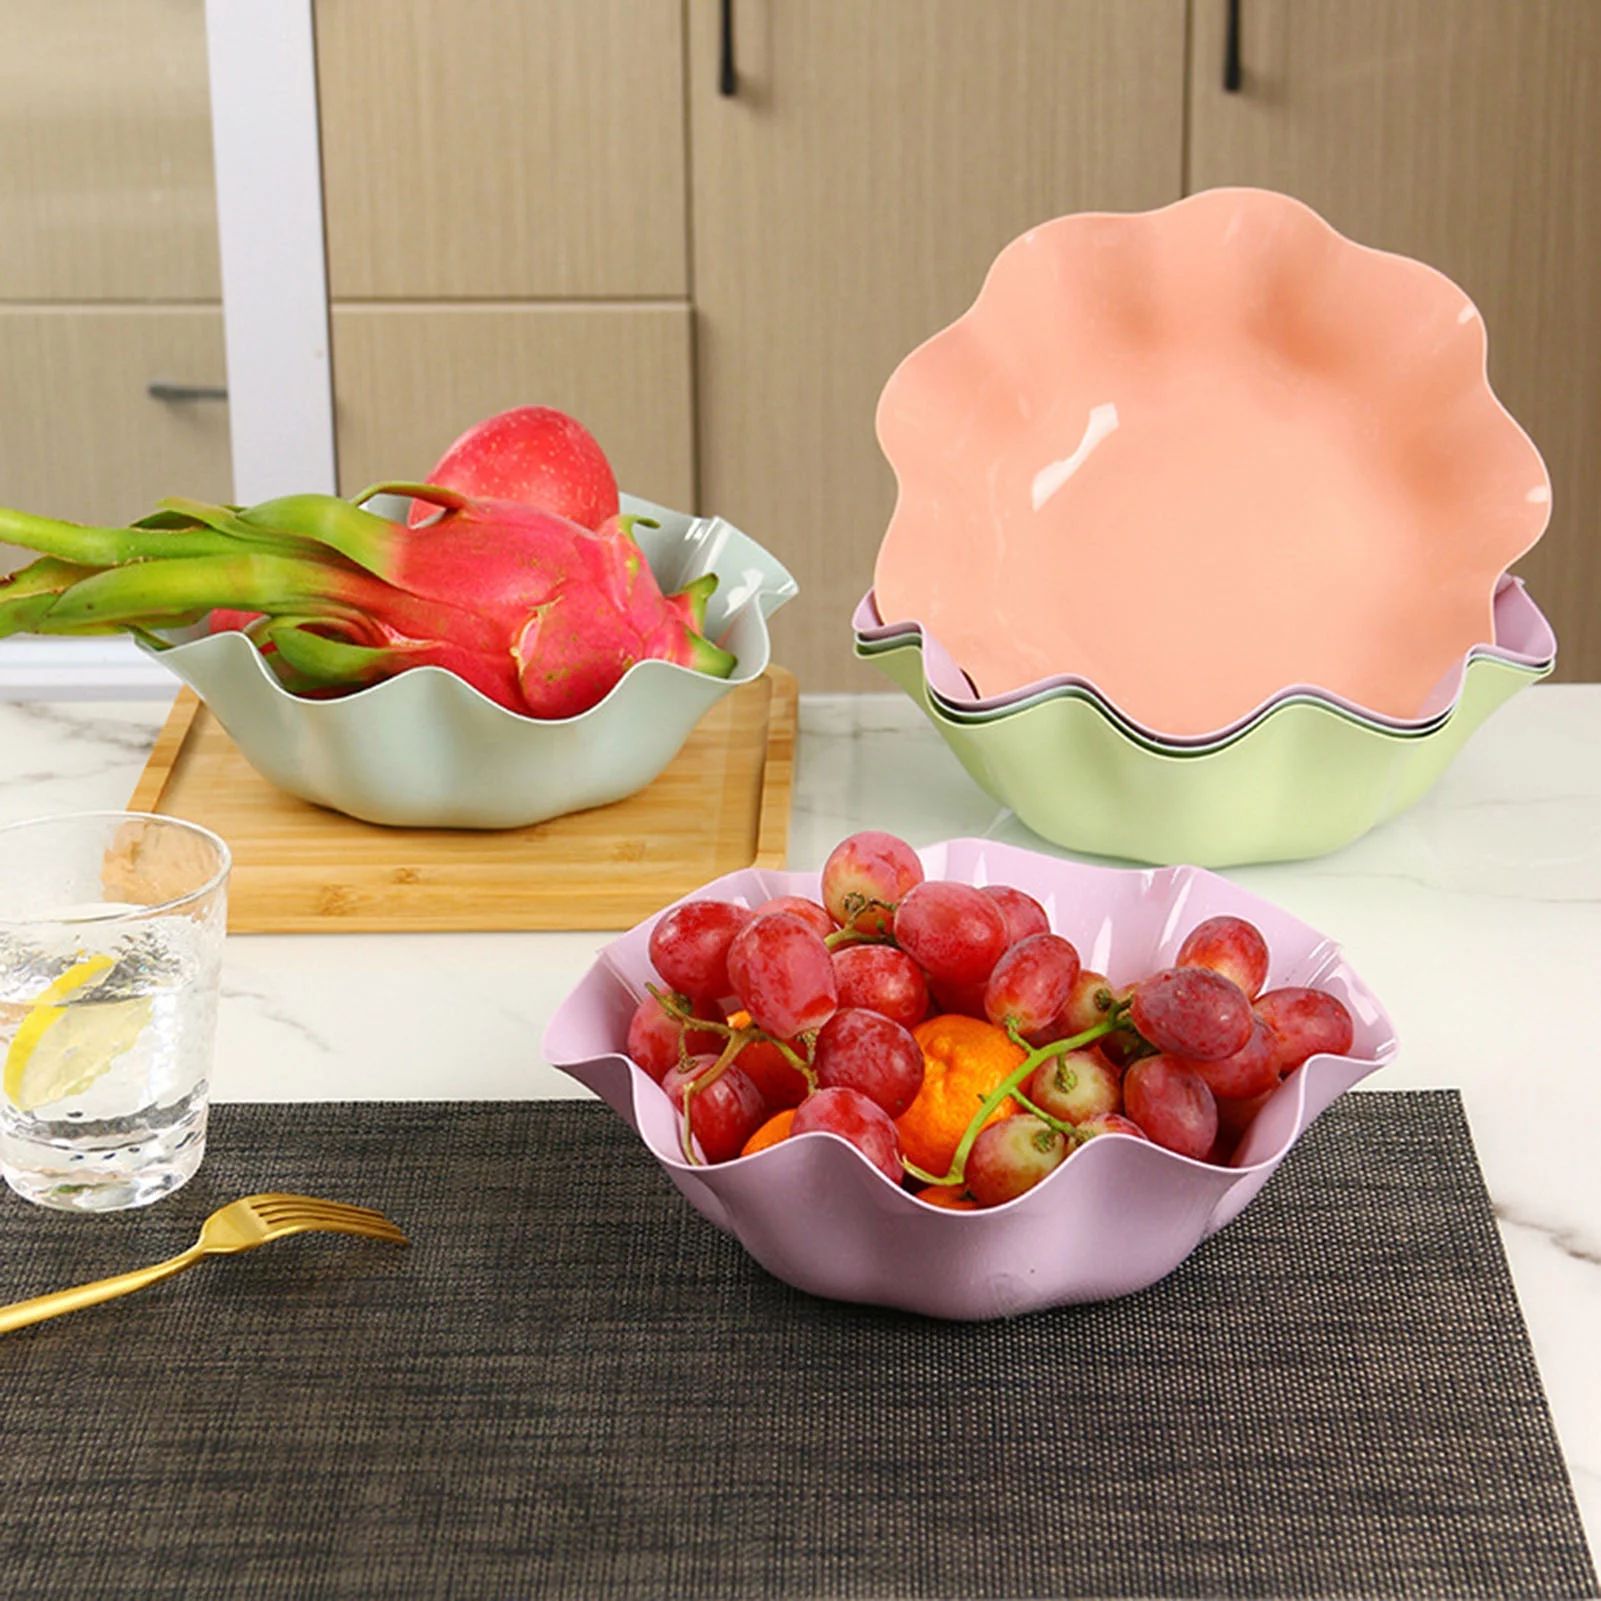 Hobeauty Snack Dish All-purpose Ruffled Design Plastic Non-slip Salad Kitchen Bowl for Office | Walmart (US)